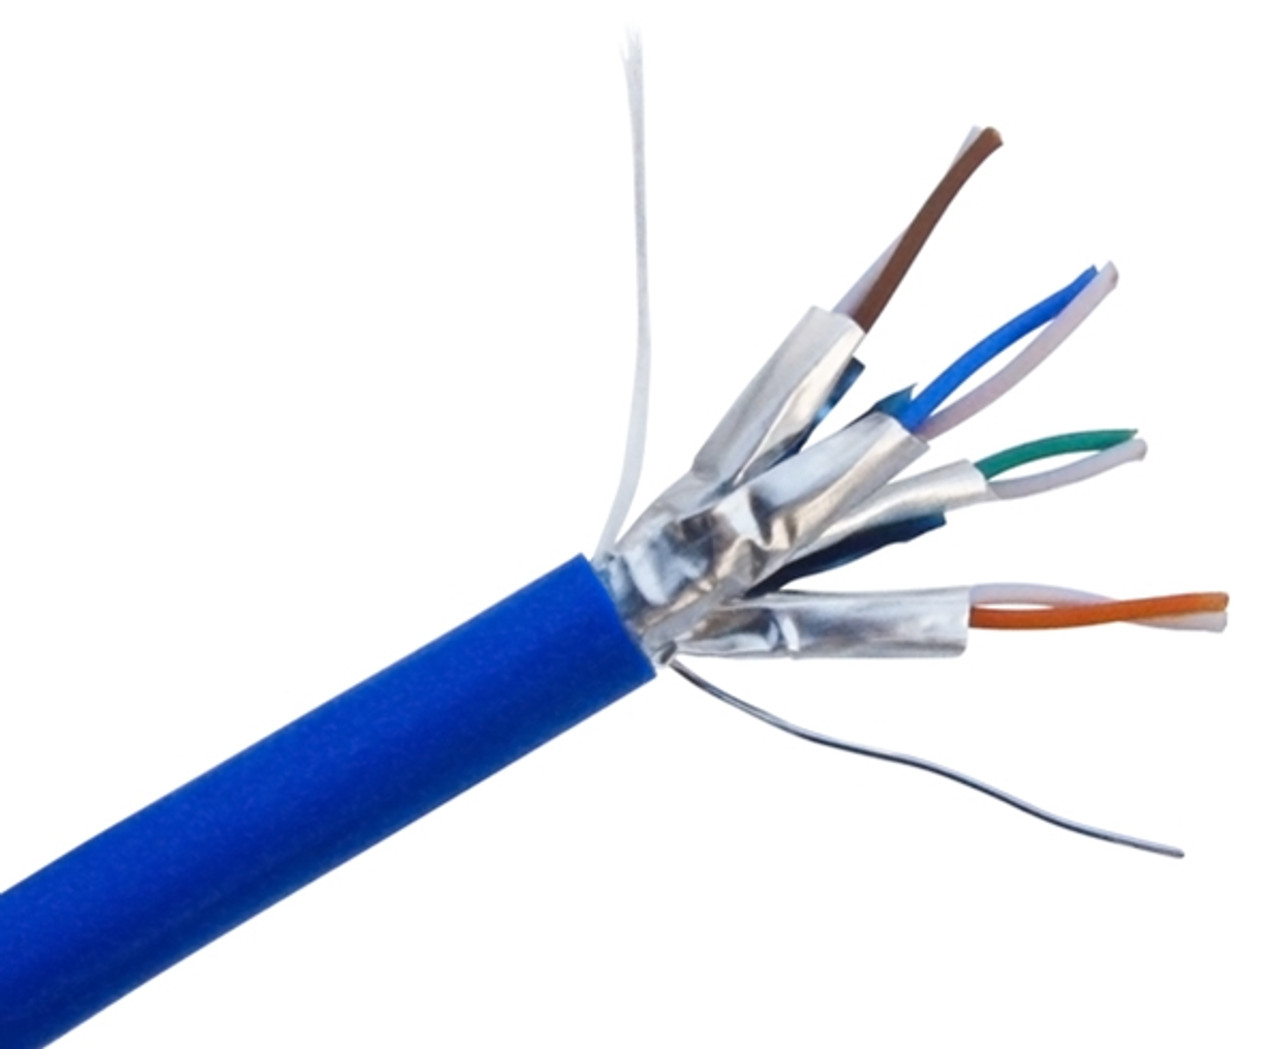 Cat6a Ethernet Solid Bulk Cable,1000ft, UTP, 23AWG, Blue 